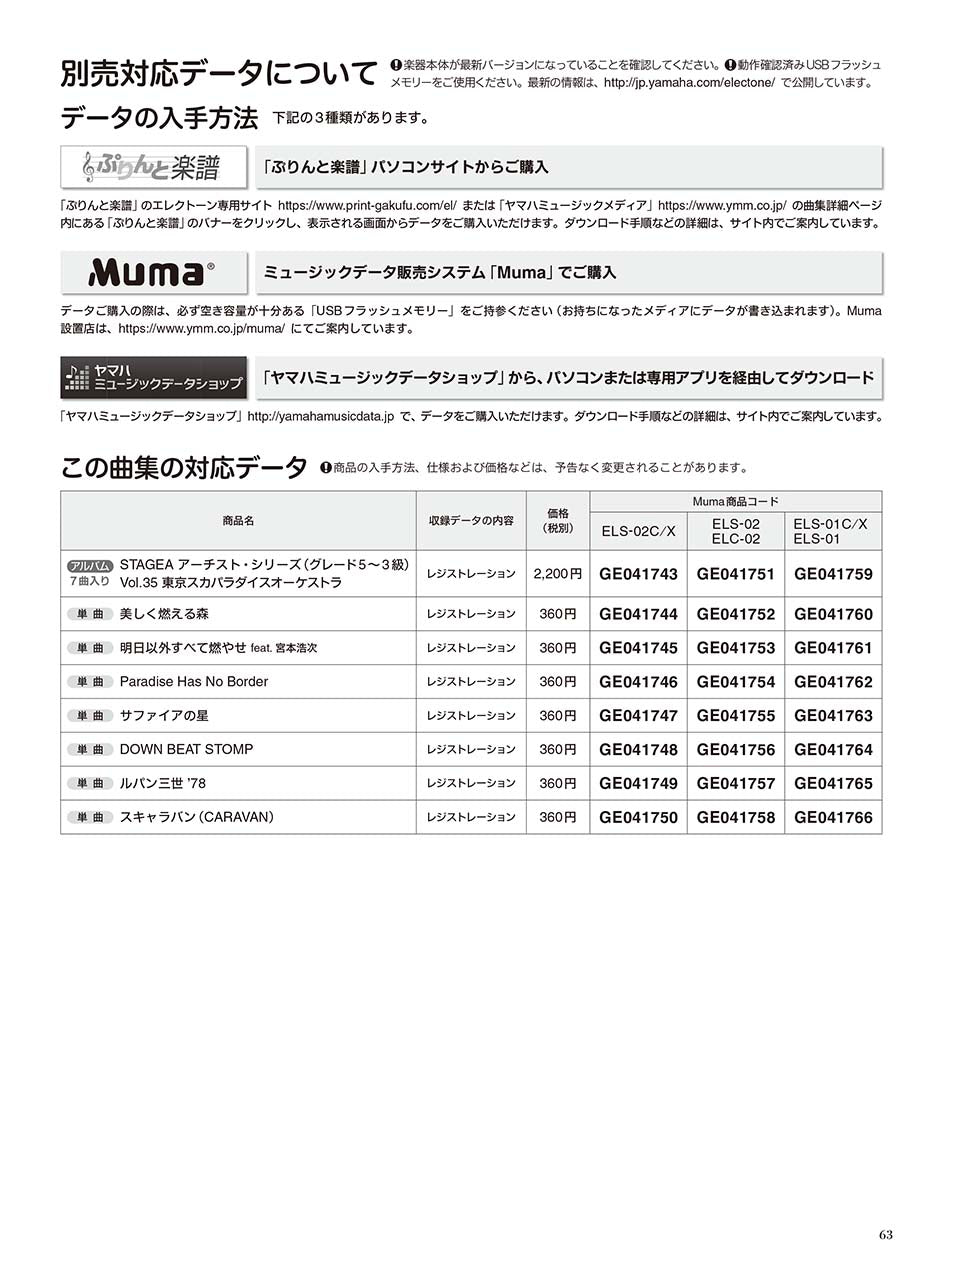 STAGEA アーチスト 5～3級 Vol.35 東京スカパラダイスオーケストラ_1